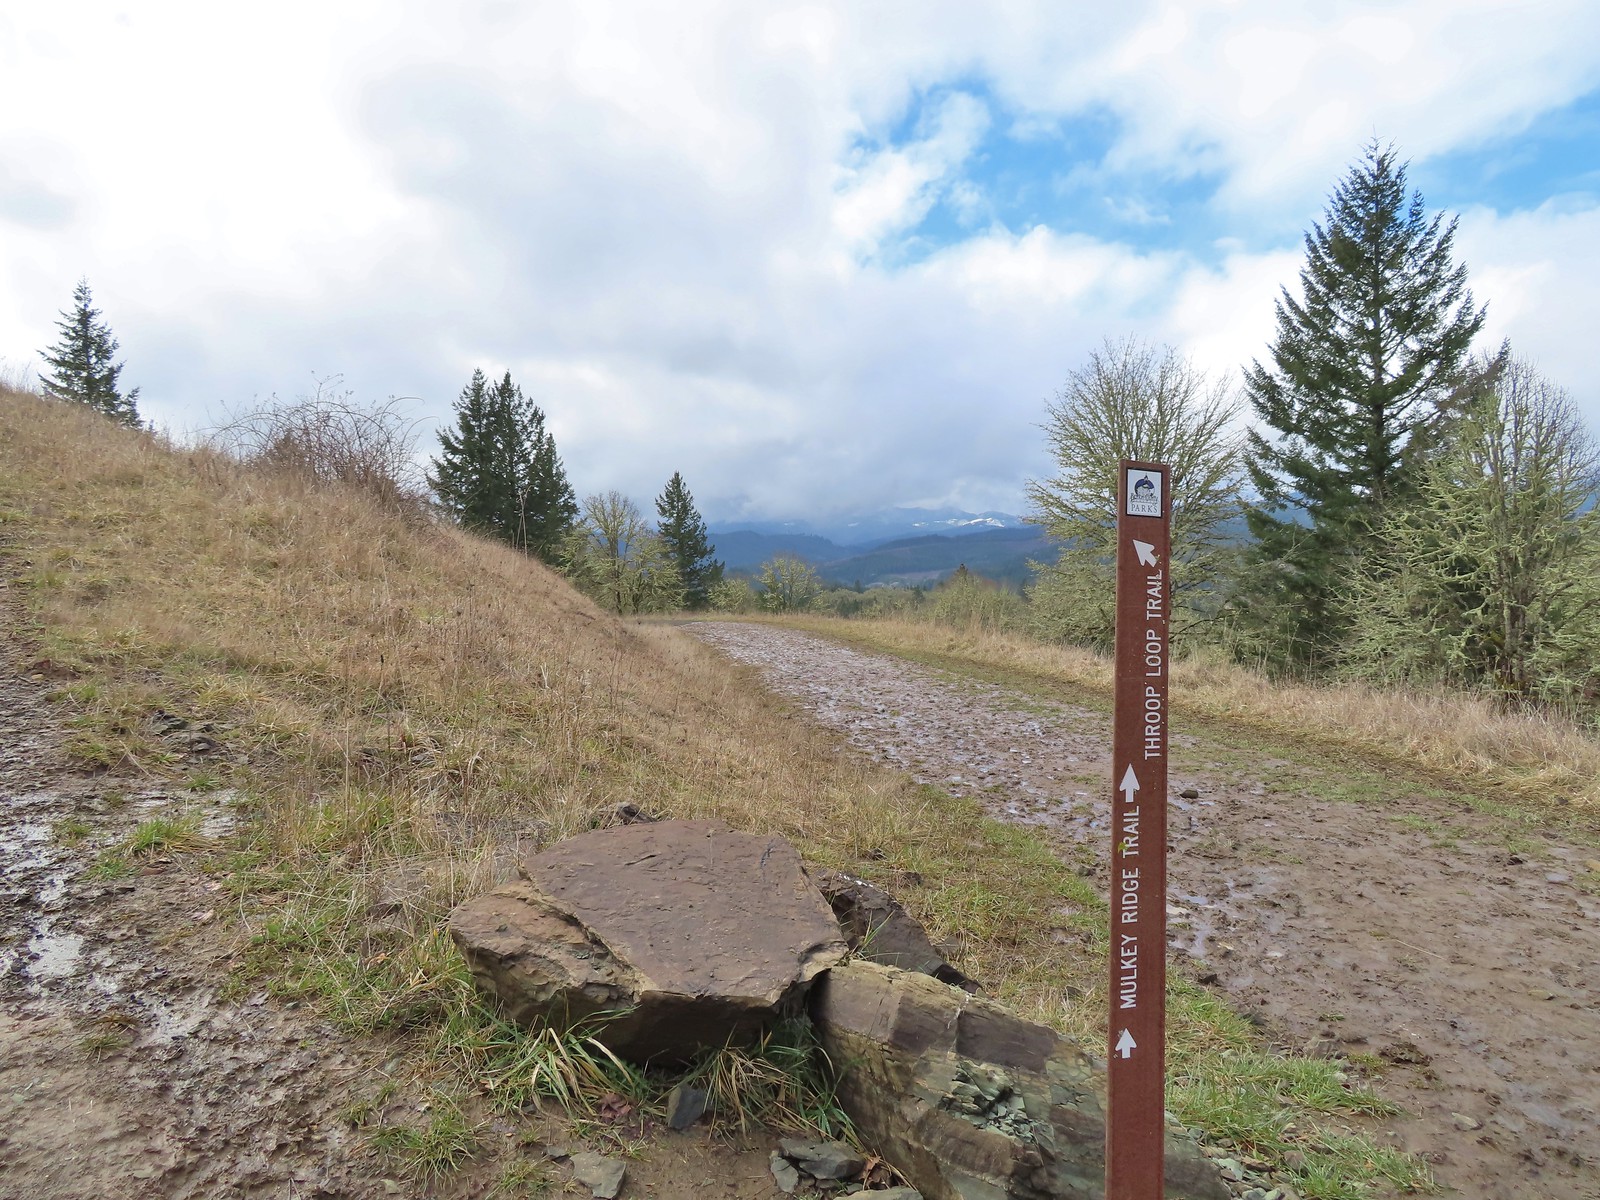 Mulkey Ridge Trail junction with the Allen Throop Loop Trail